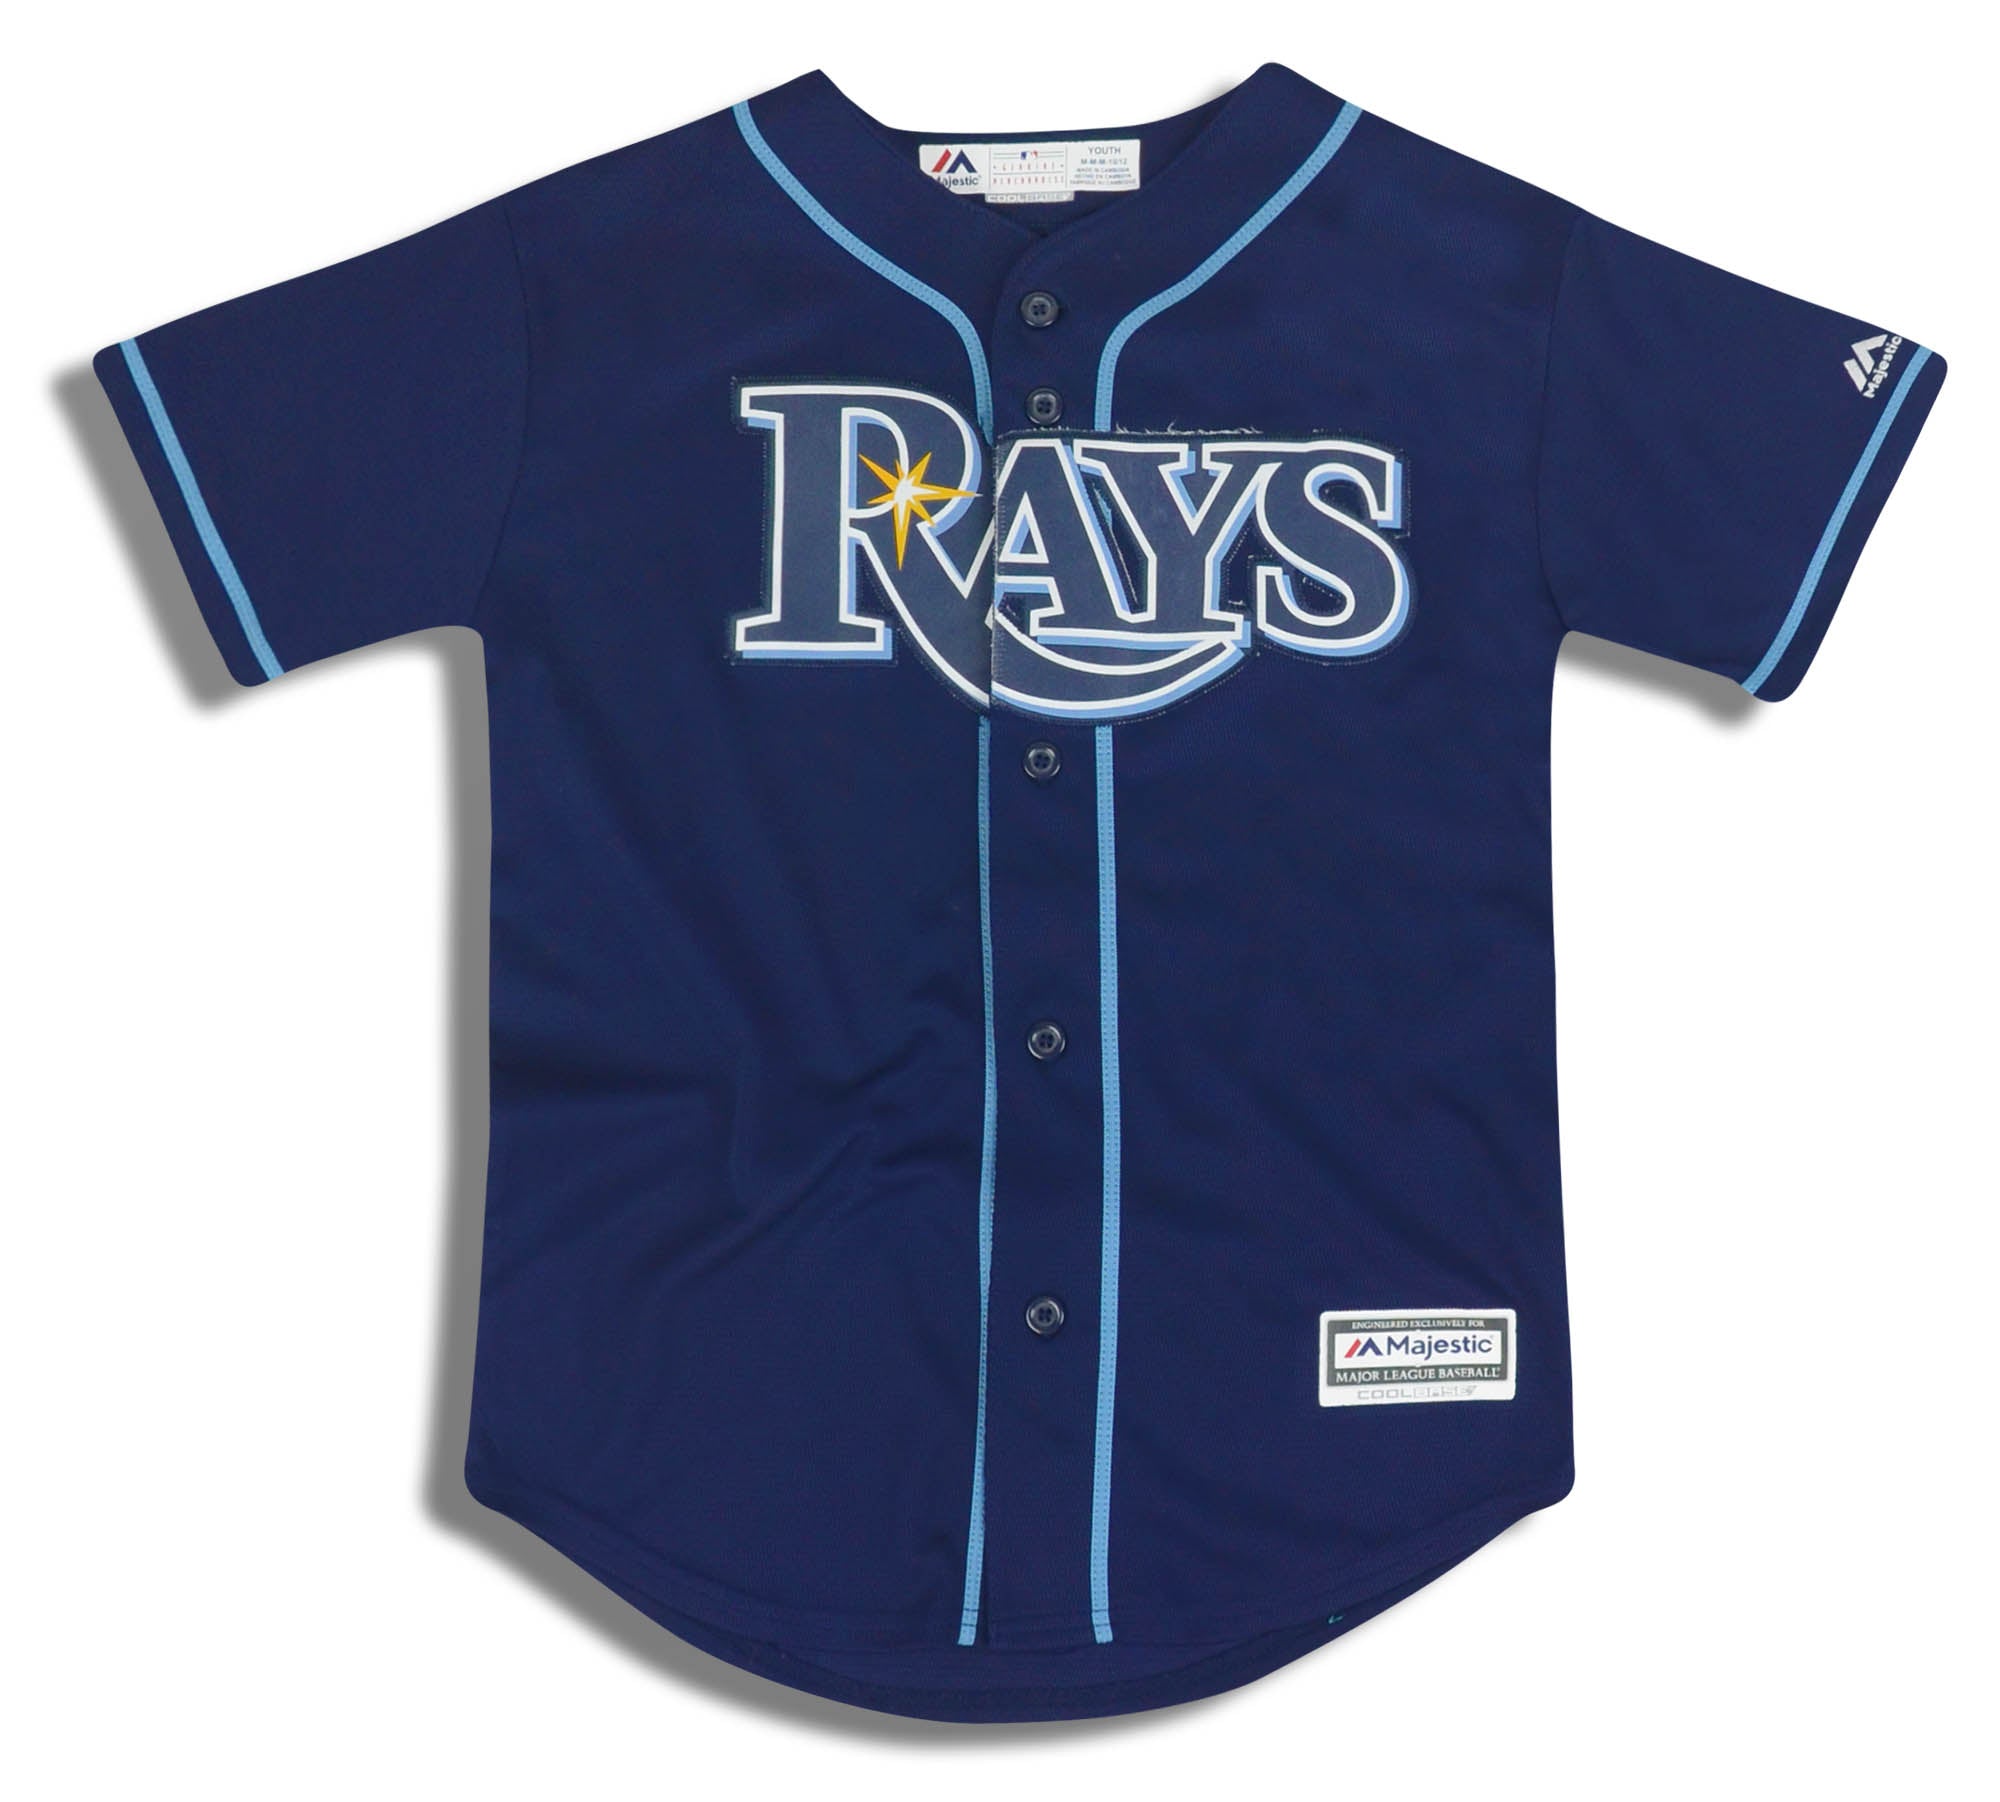 Tampa Bay Devil Rays Alternate Uniform - American League (AL